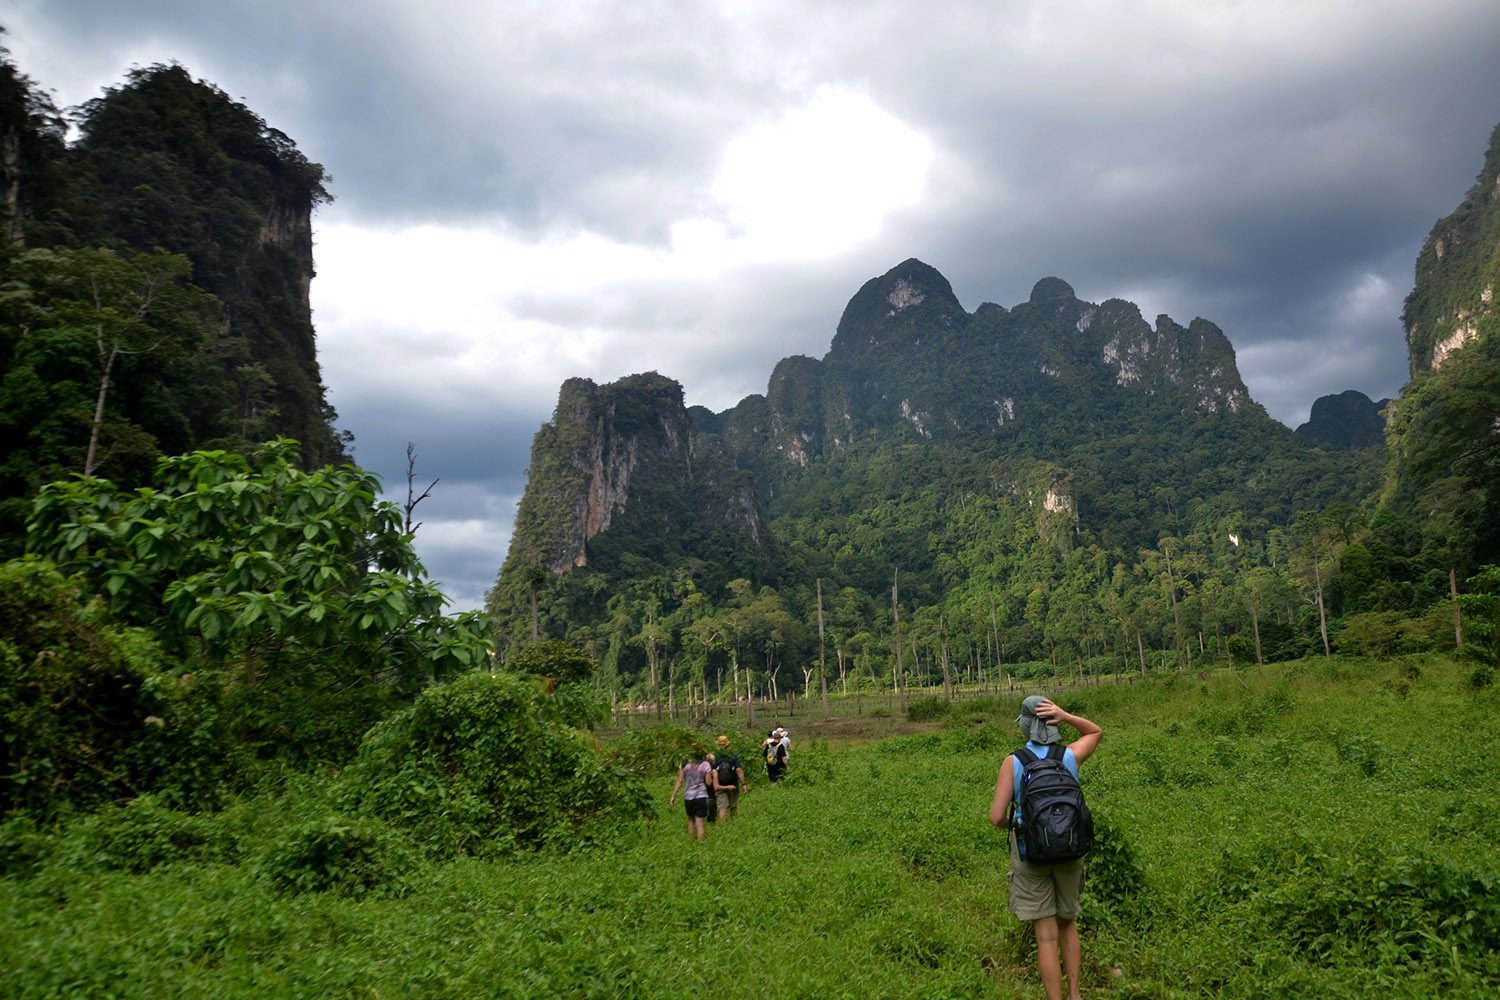 Hiking through the jungles of Khao Sok